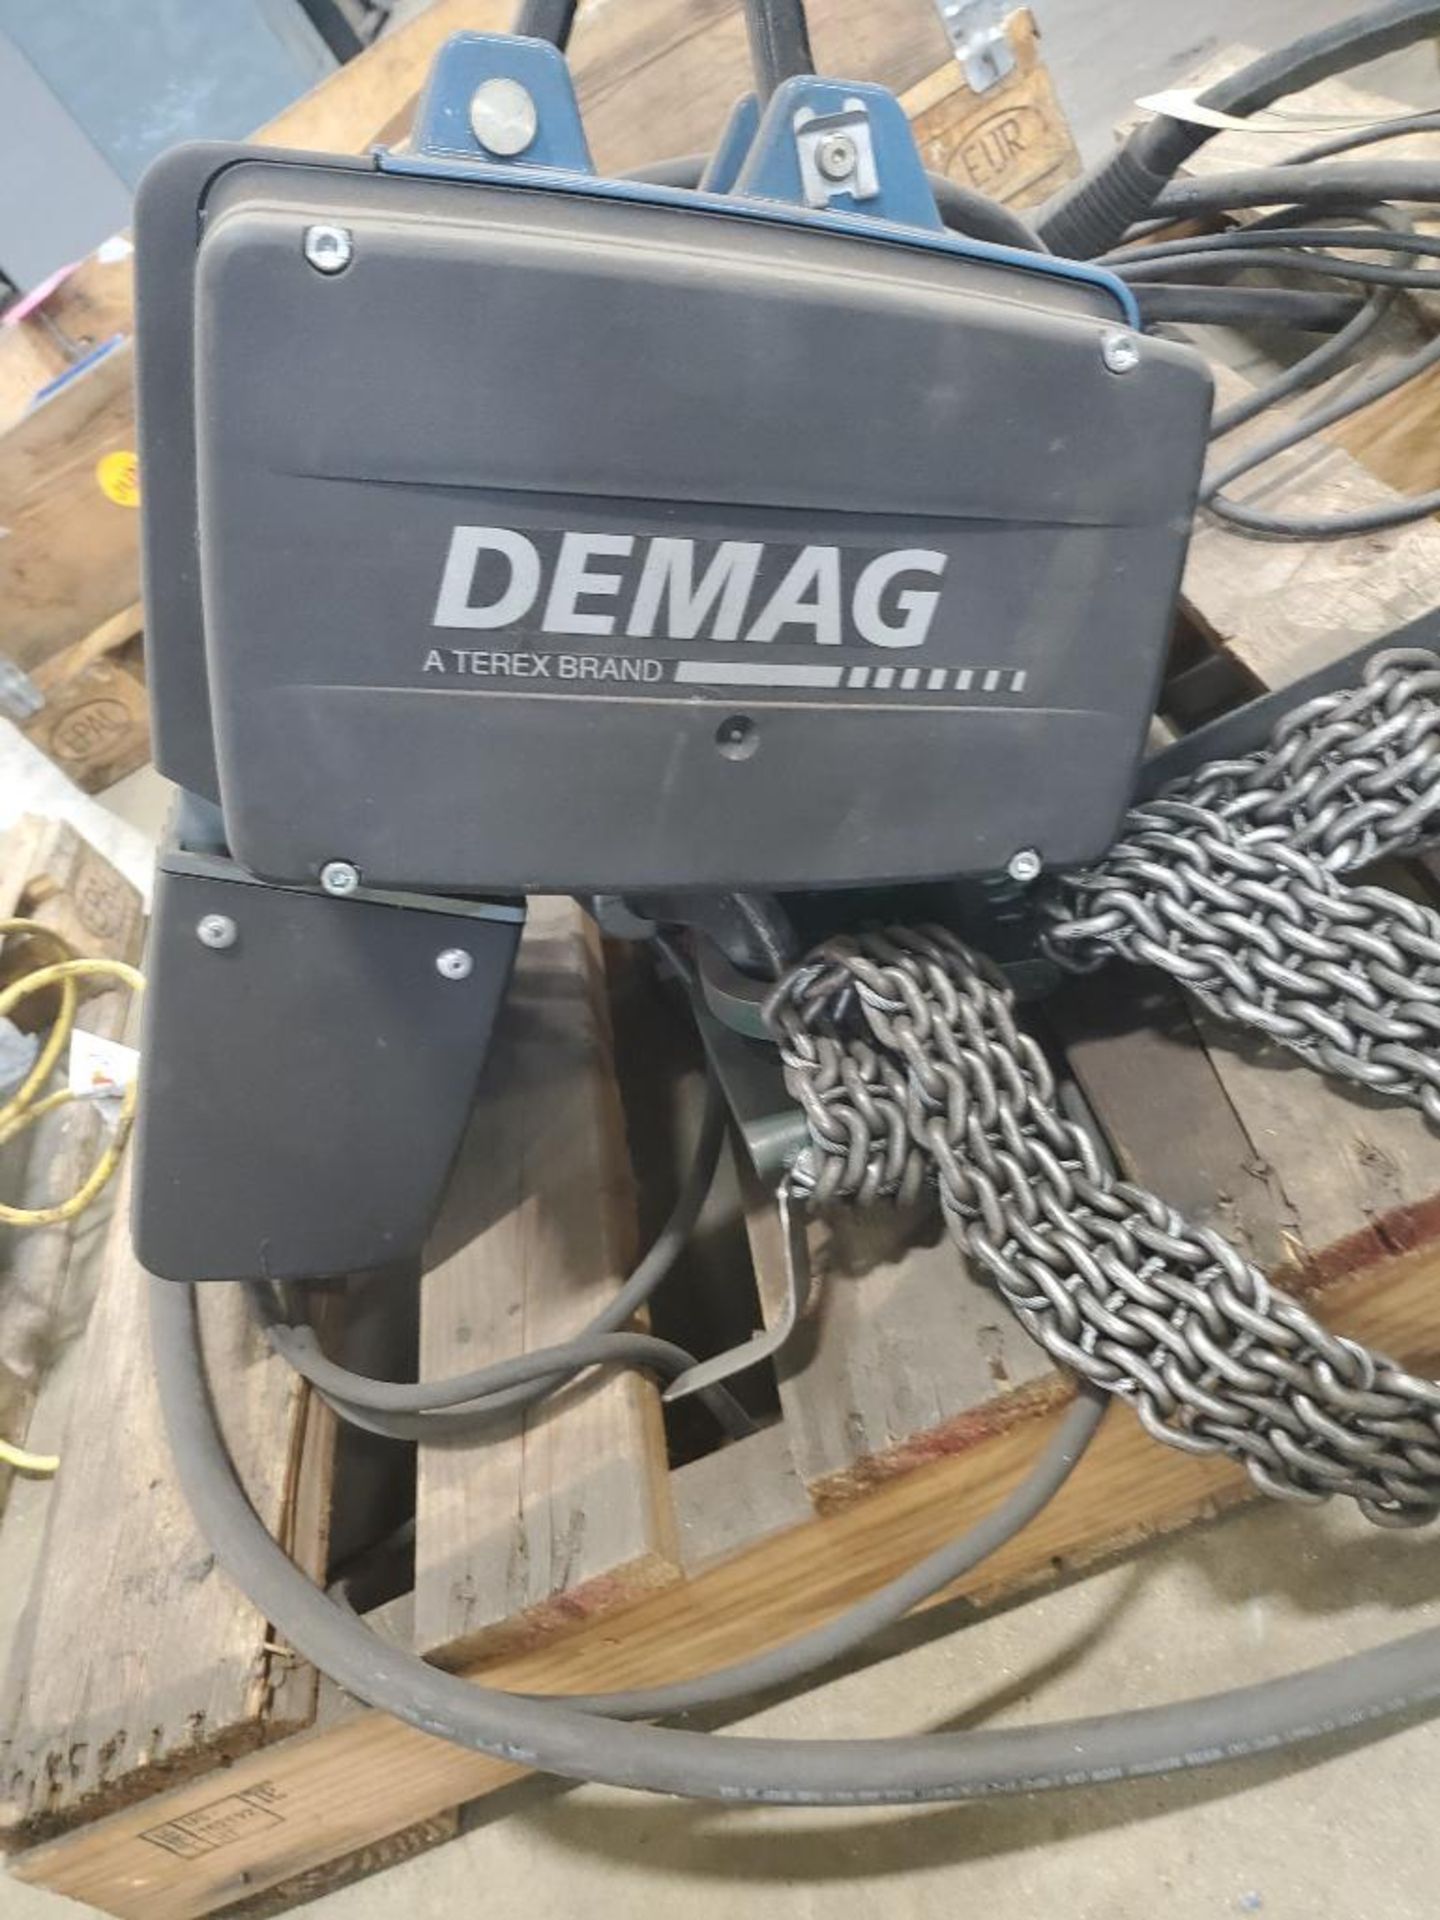 Demag Terex DC-COM 10-1000 1/1 H5, V4v3/1,2. 2200LBS electric hoist. 3PH 440-480V. - Image 3 of 4